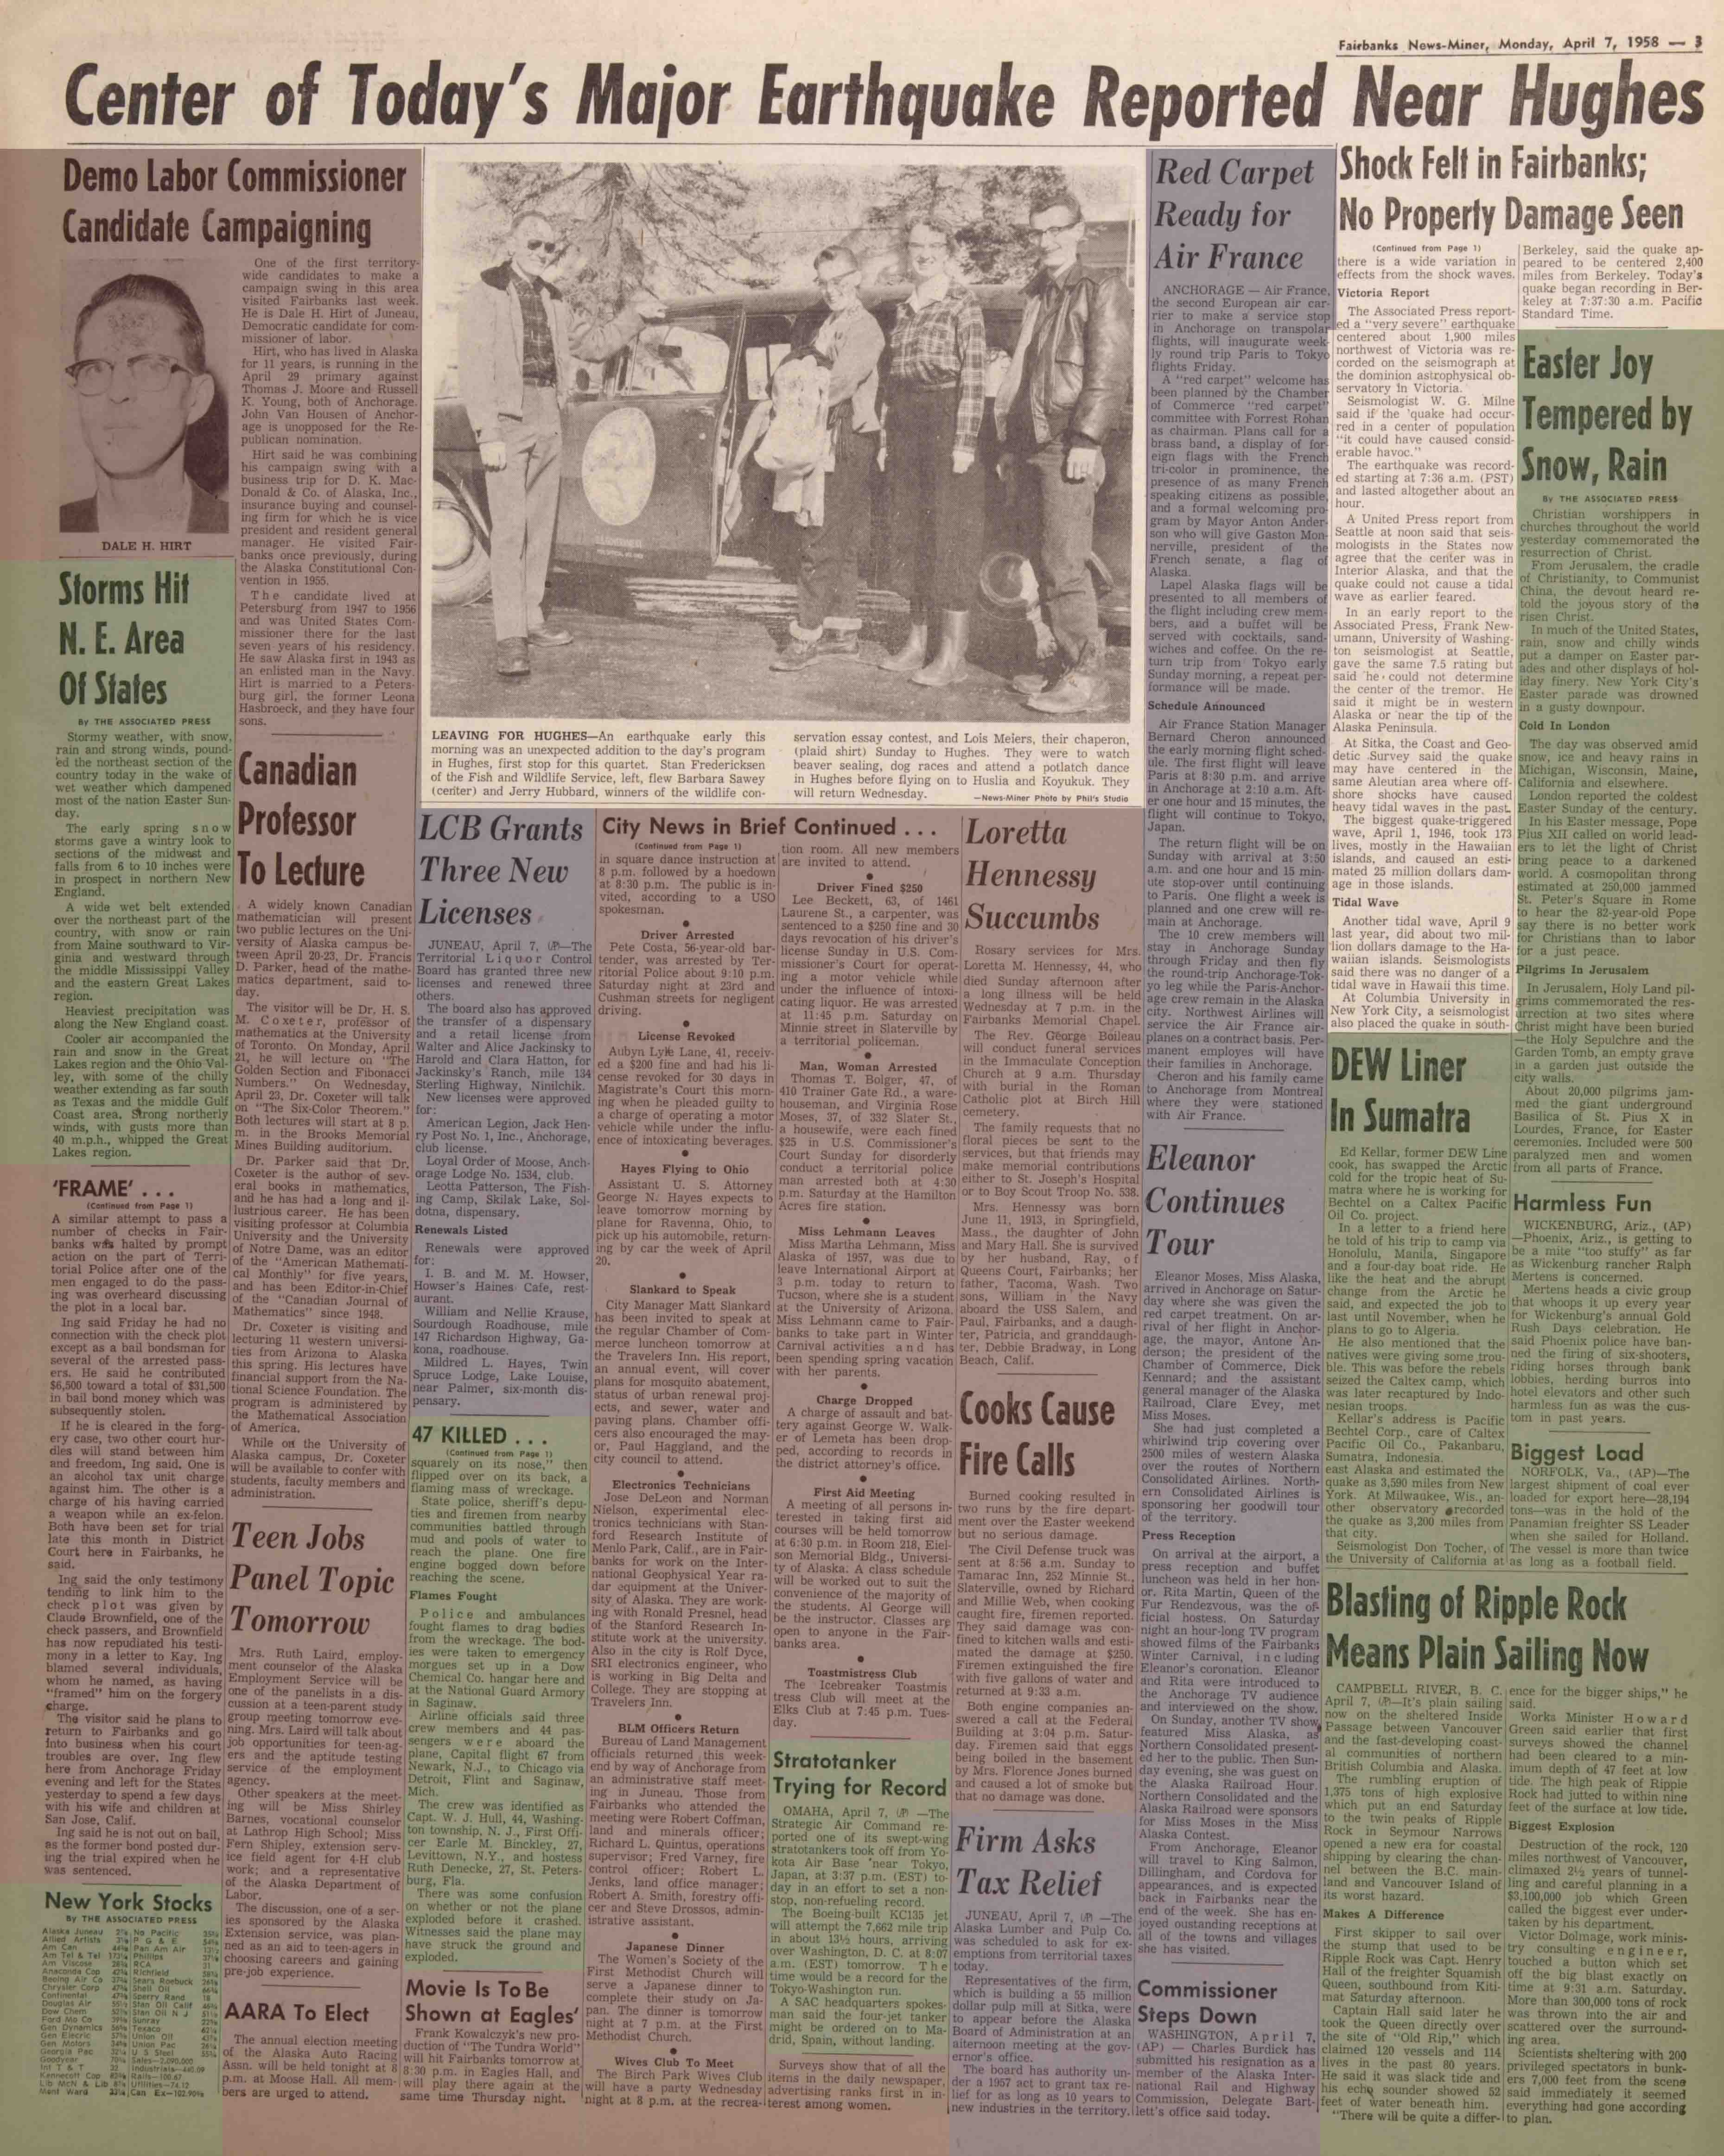 1958 April 7, Fairbanks Daily News-Miner (pg 3)